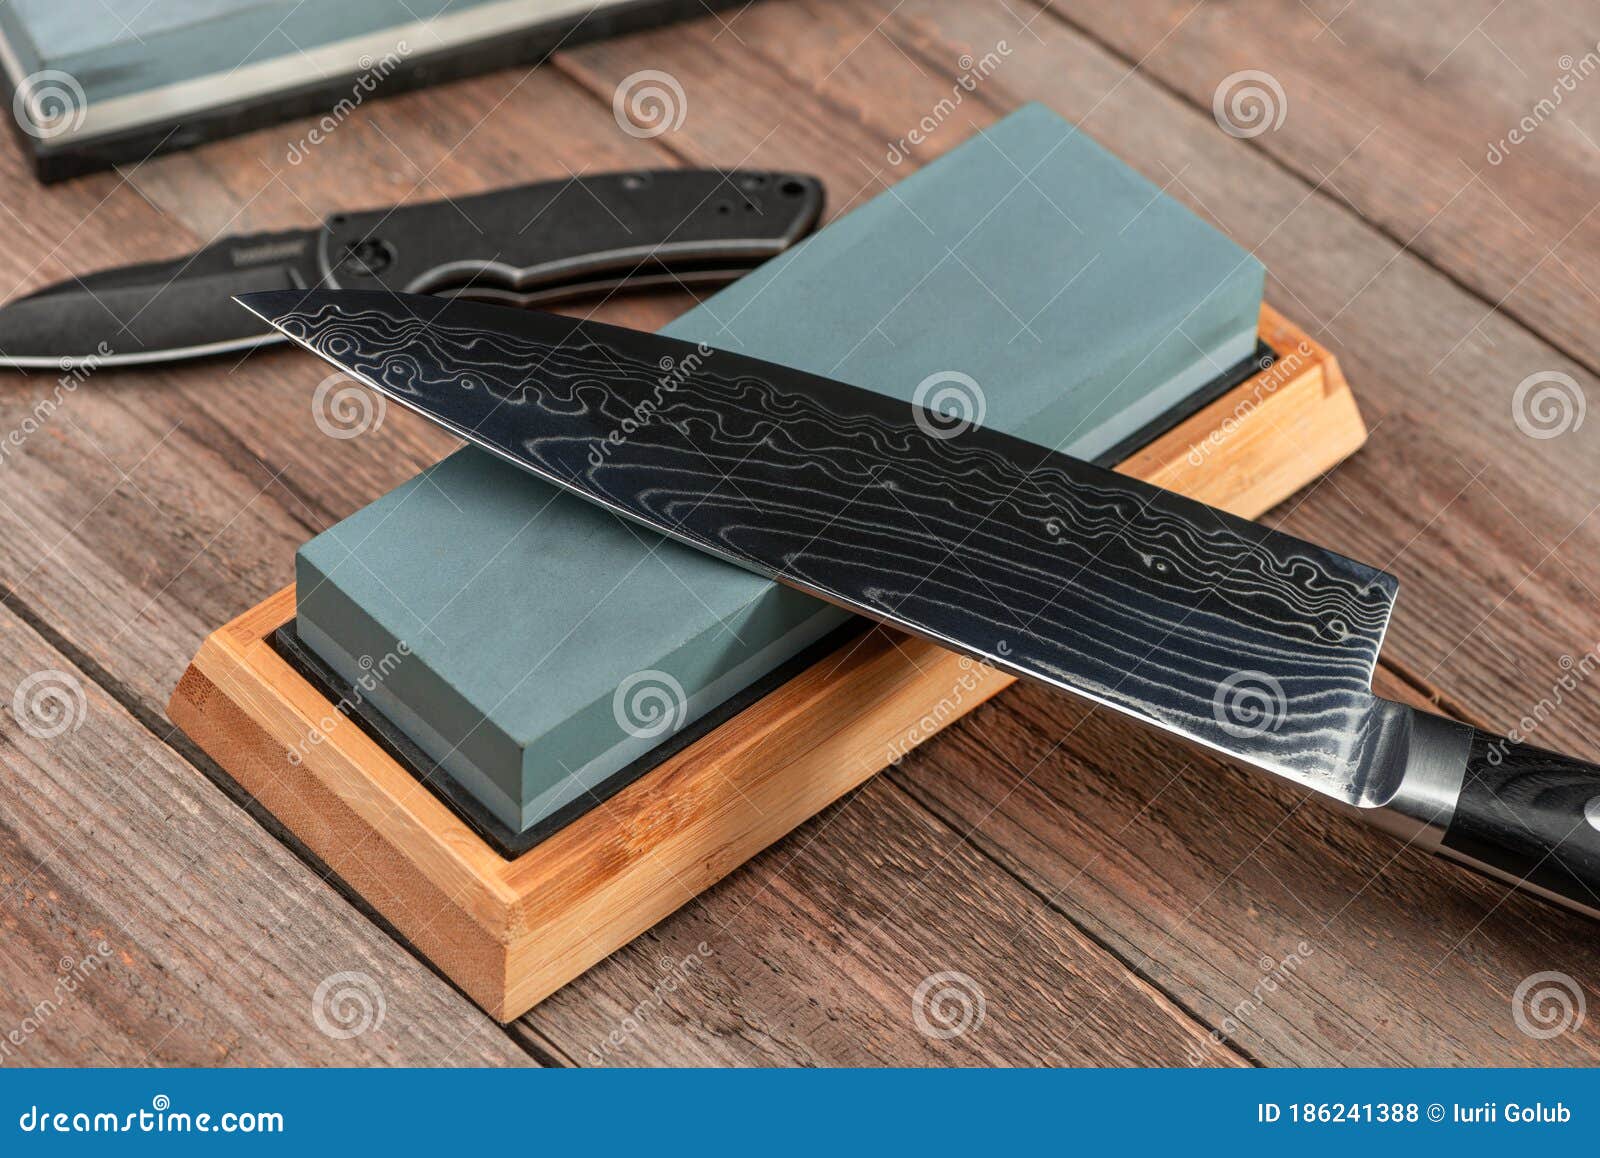 Sharpening A Japanese Gyuto Knife And A Jackknife With A Whetstone Stock Photo Image Of Object Retro 186241388,Ficus Lyrata Bush